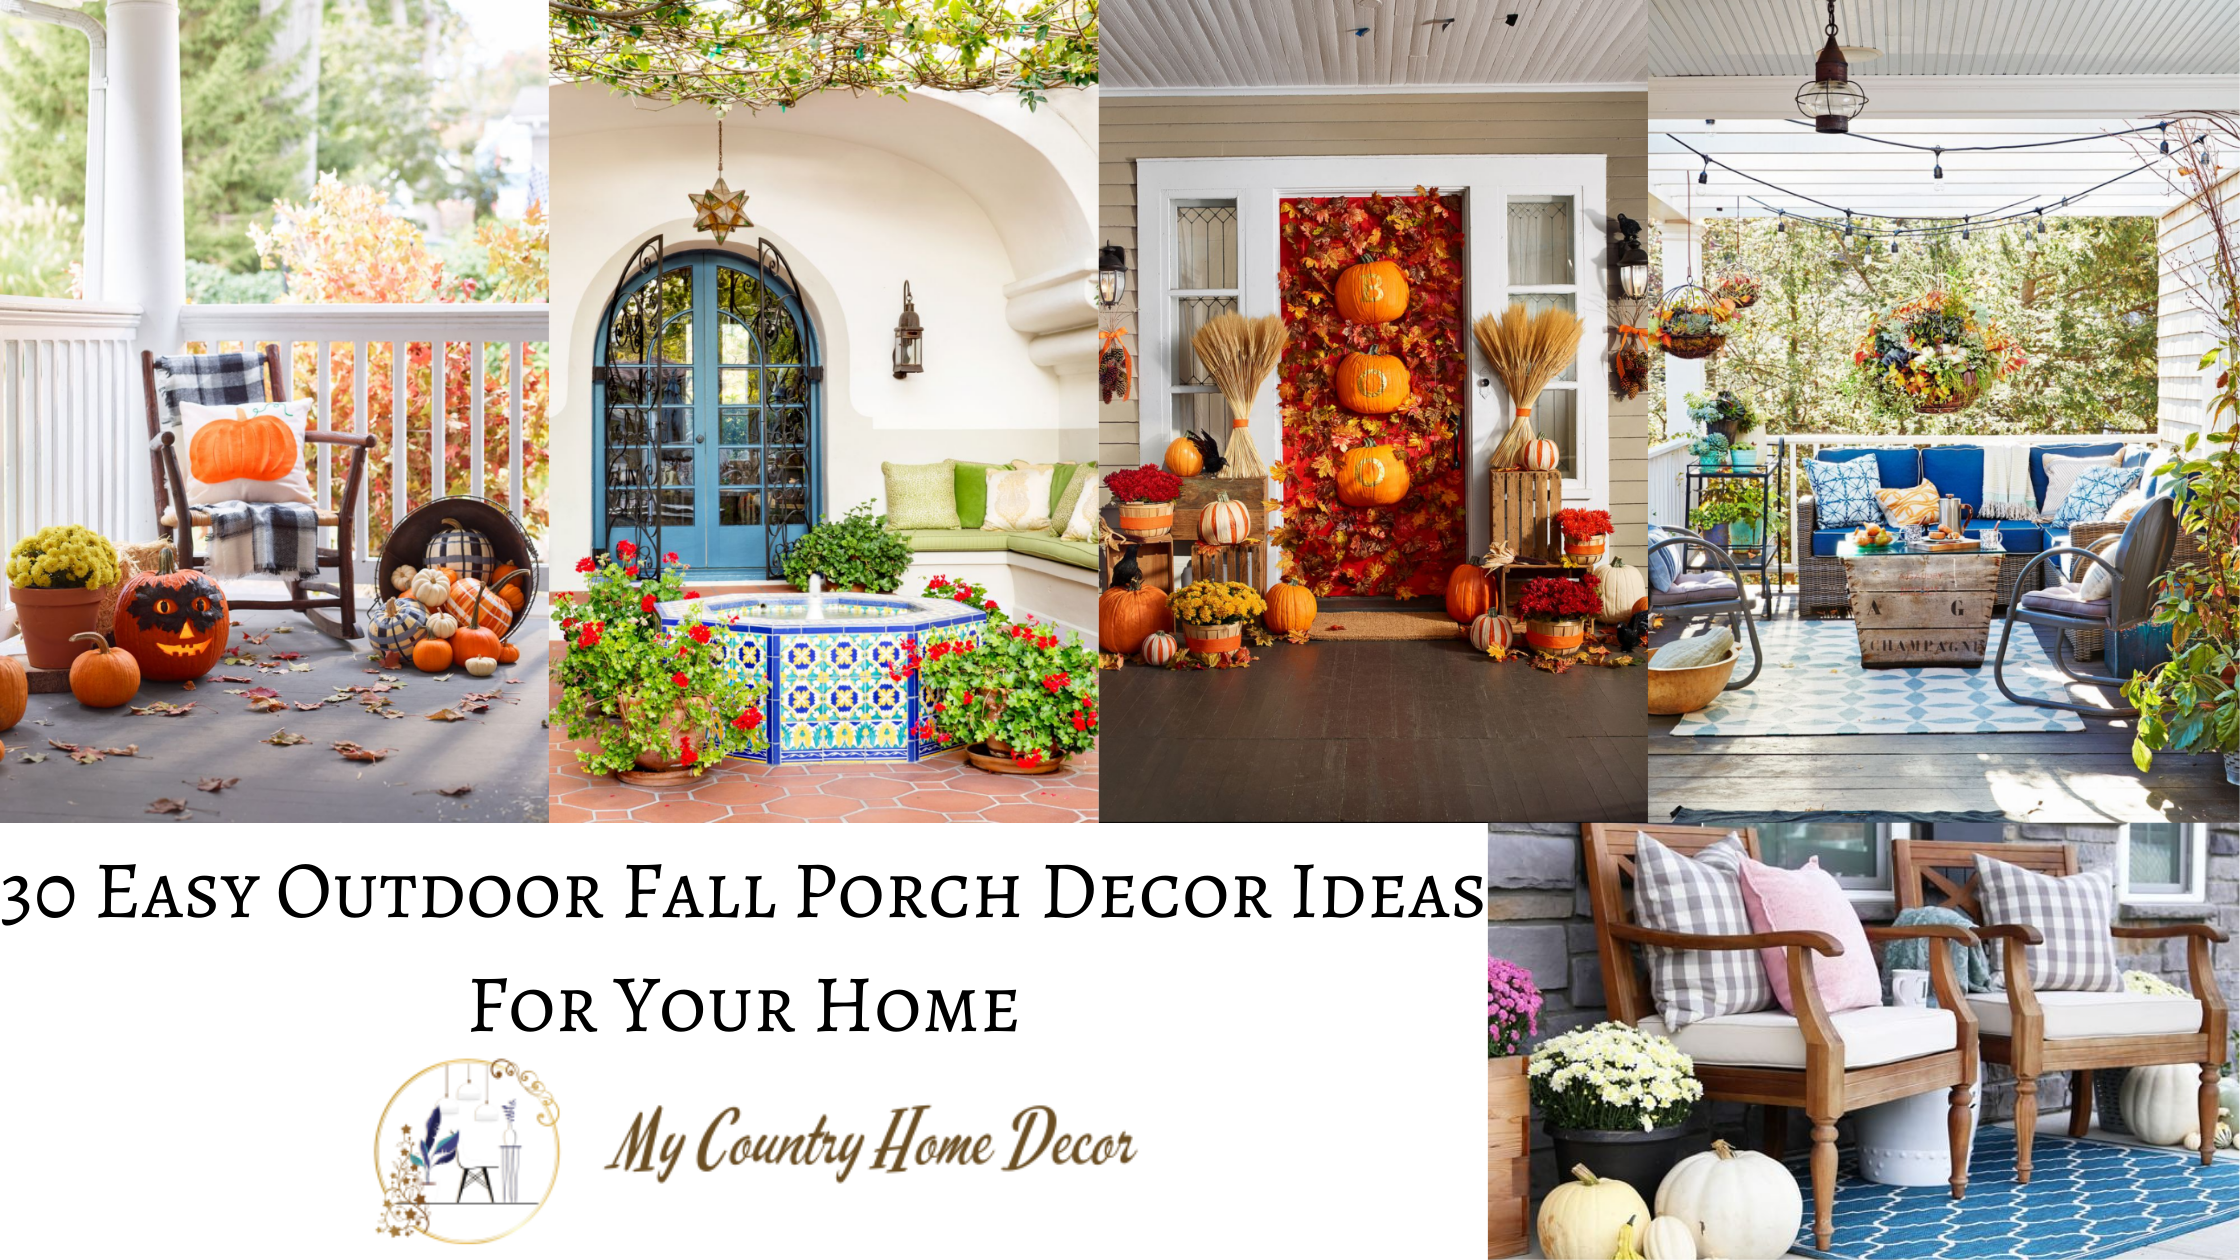 30 Easy Outdoor Fall Porch Decor Ideas for Your Home